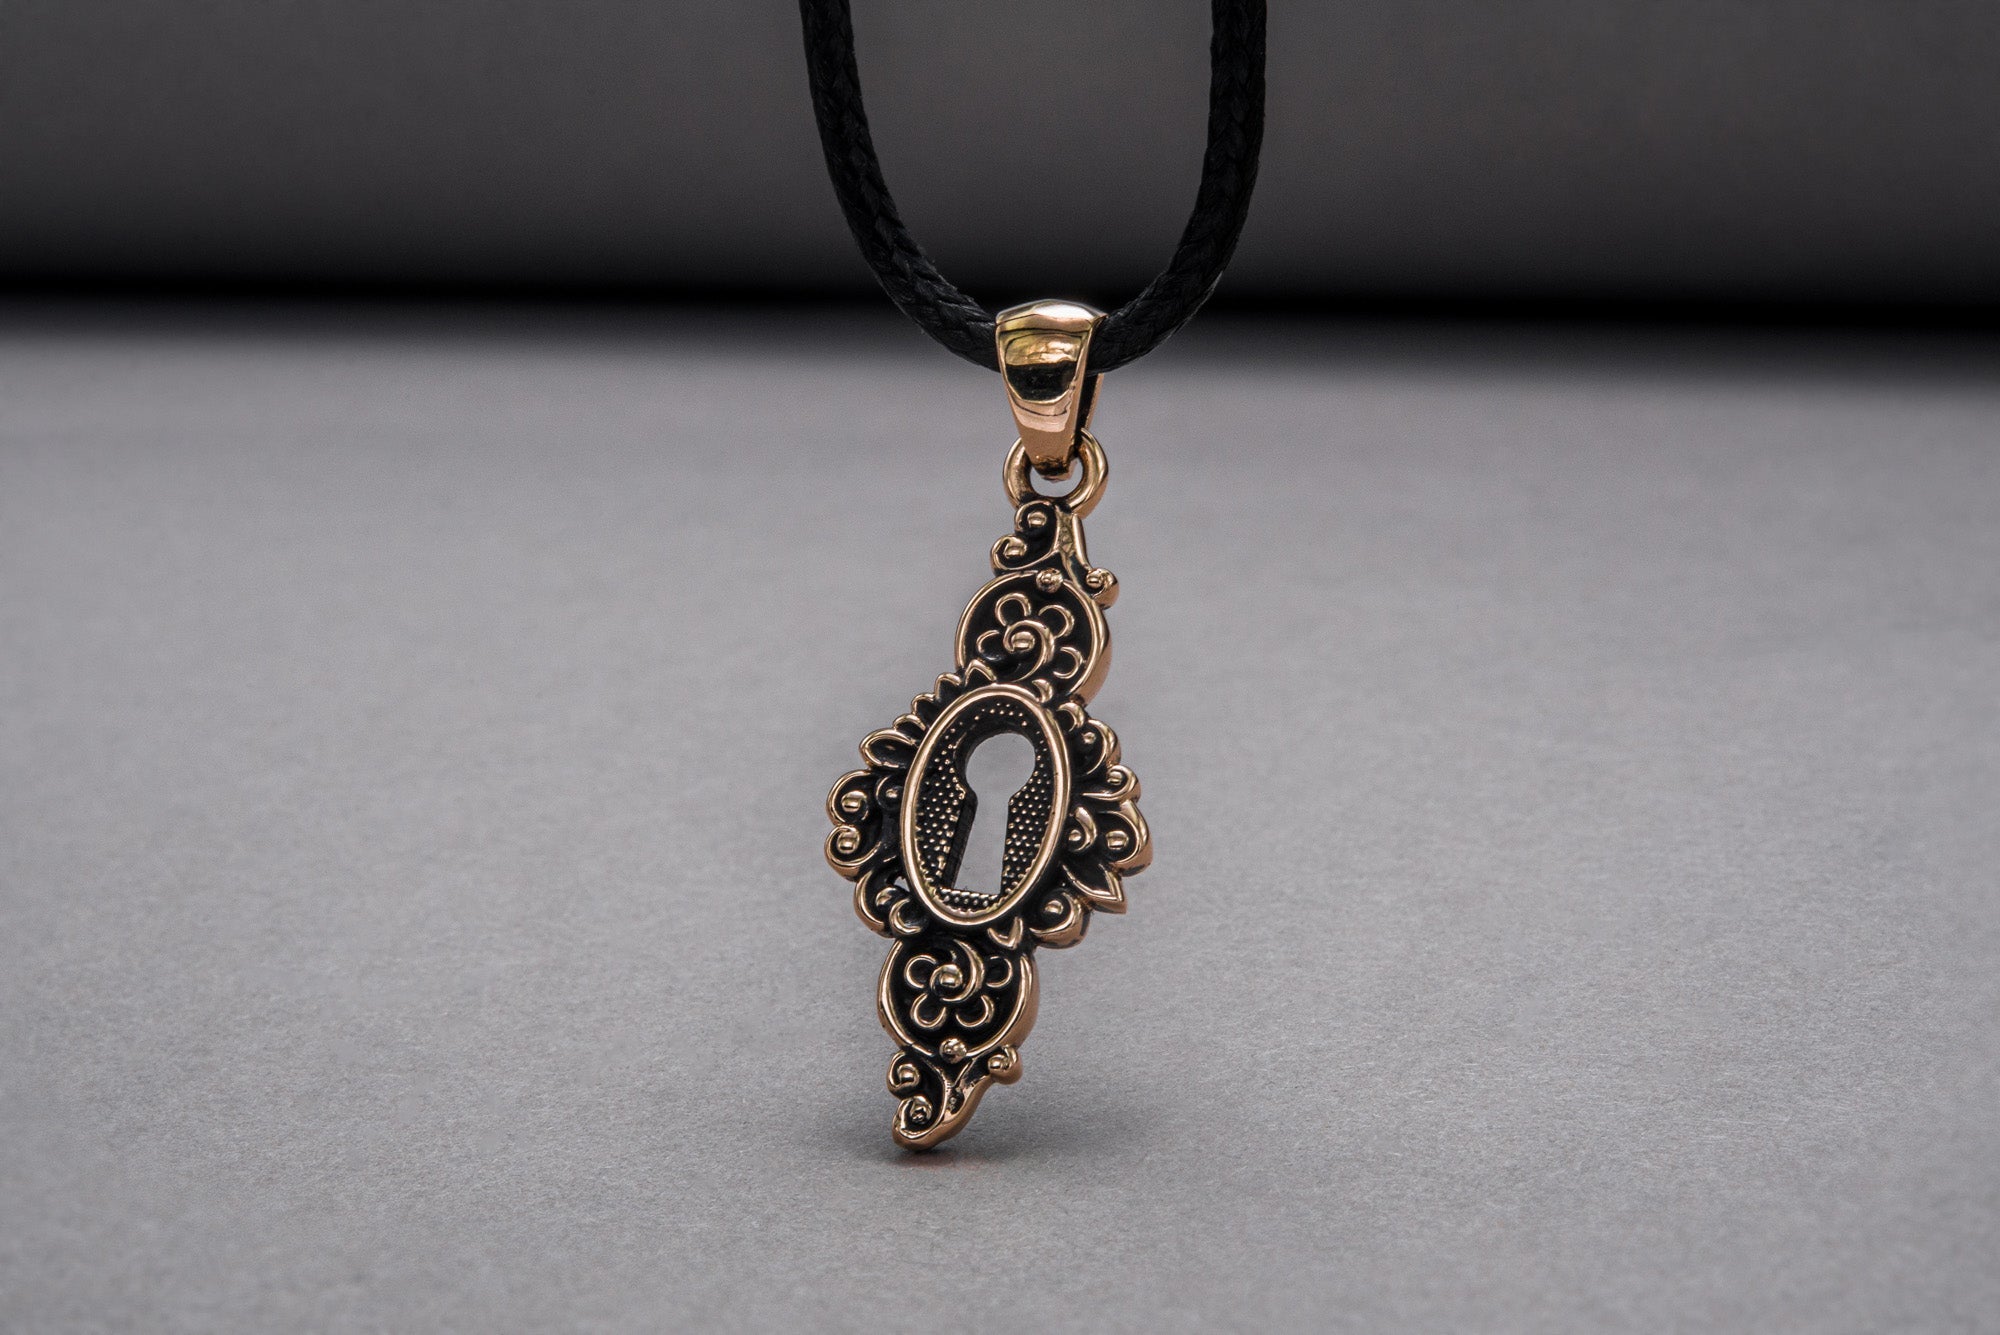 Keyhole Pendant with Flowers Ornament Bronze Jewelry - vikingworkshop